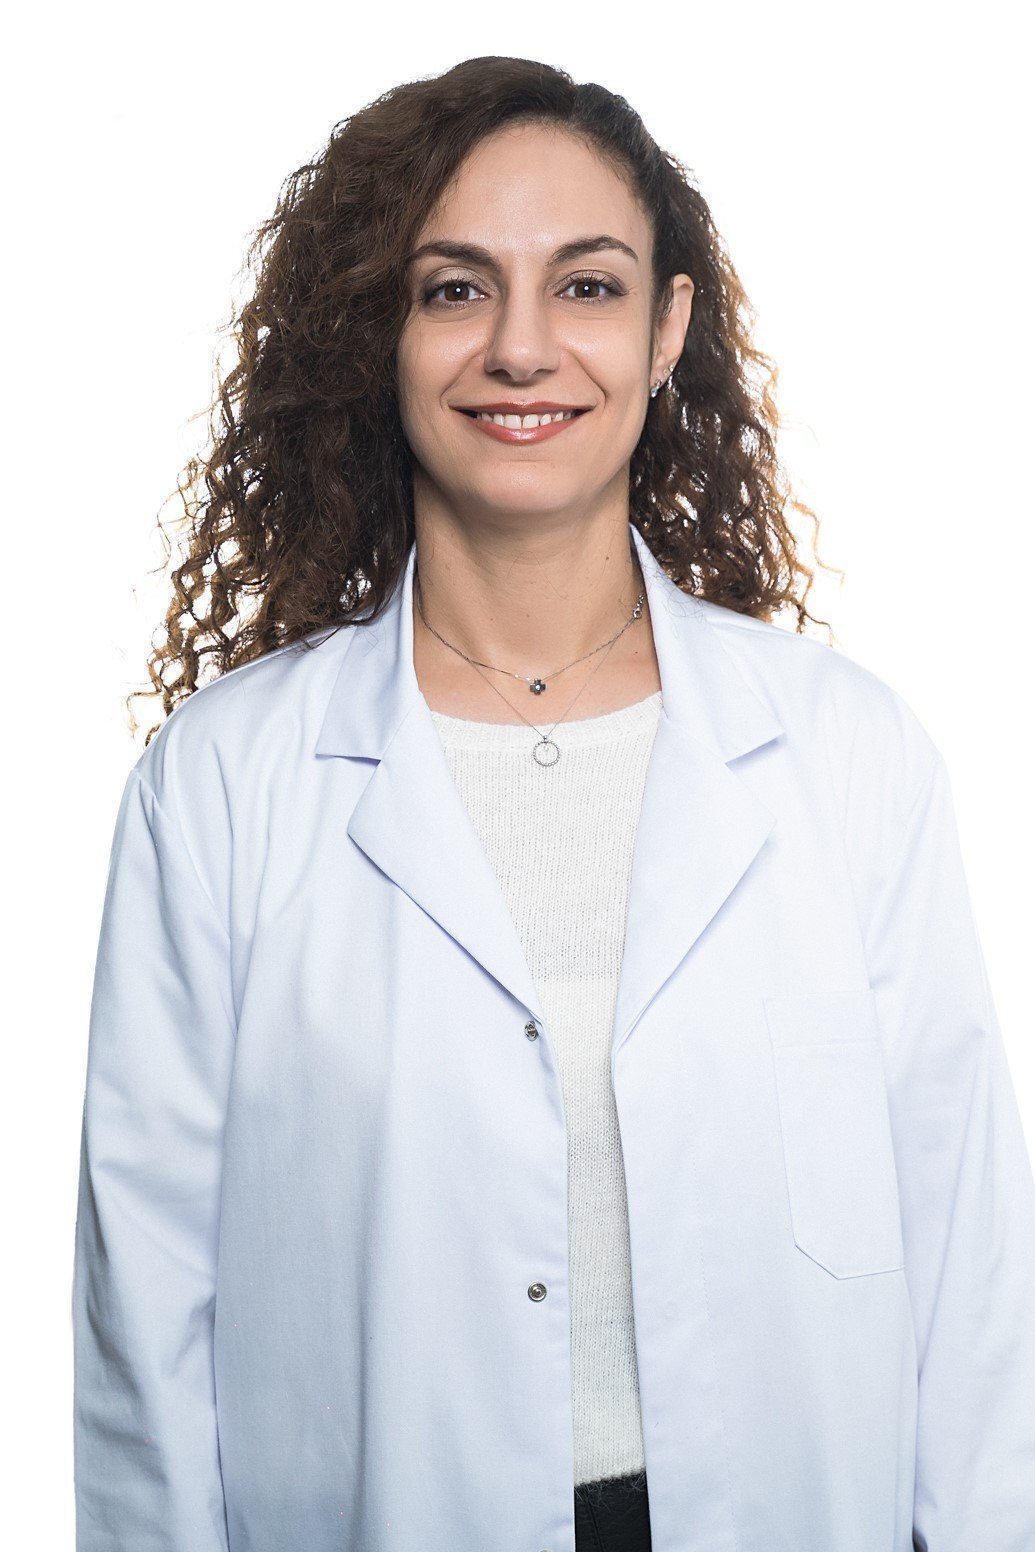 Dr. Maria Pericleous